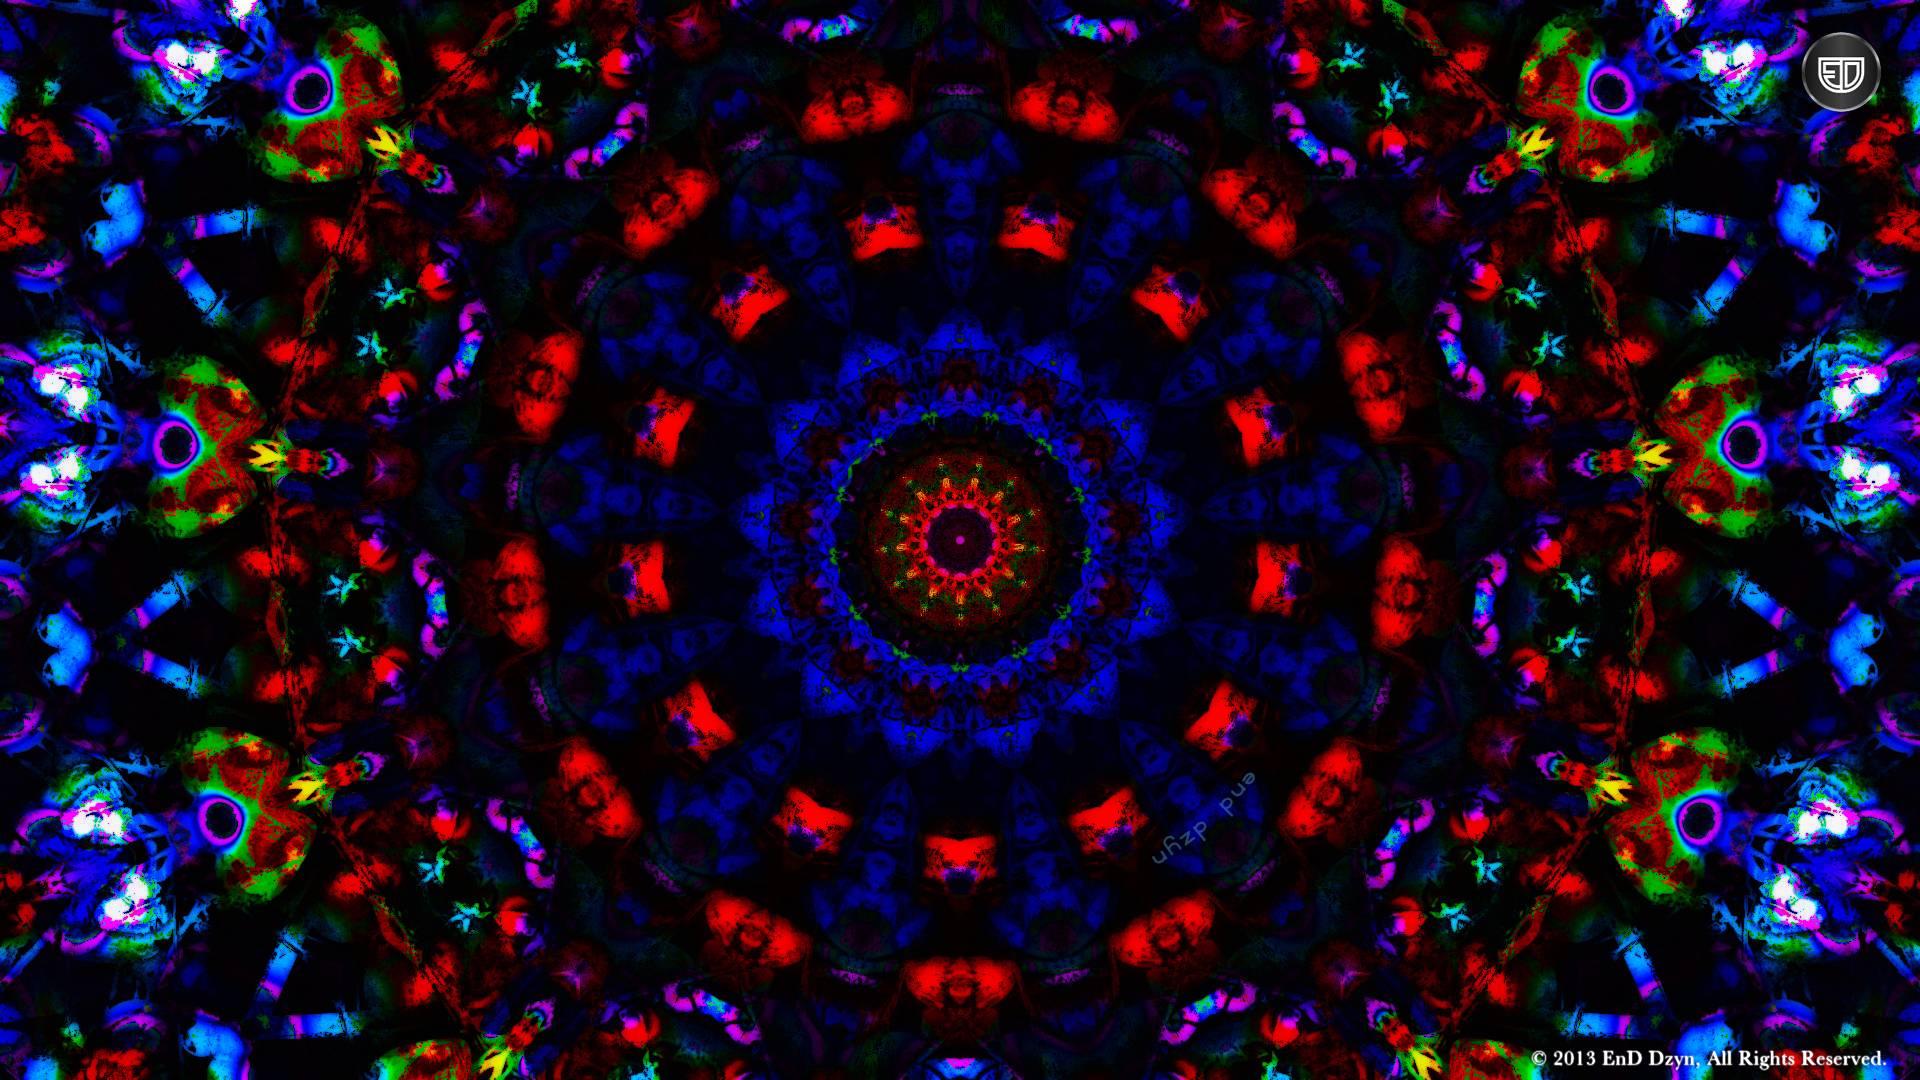 3D Trippy Psychedelic Colorful Hd Wallpaper Backgrounds Dekst 62051